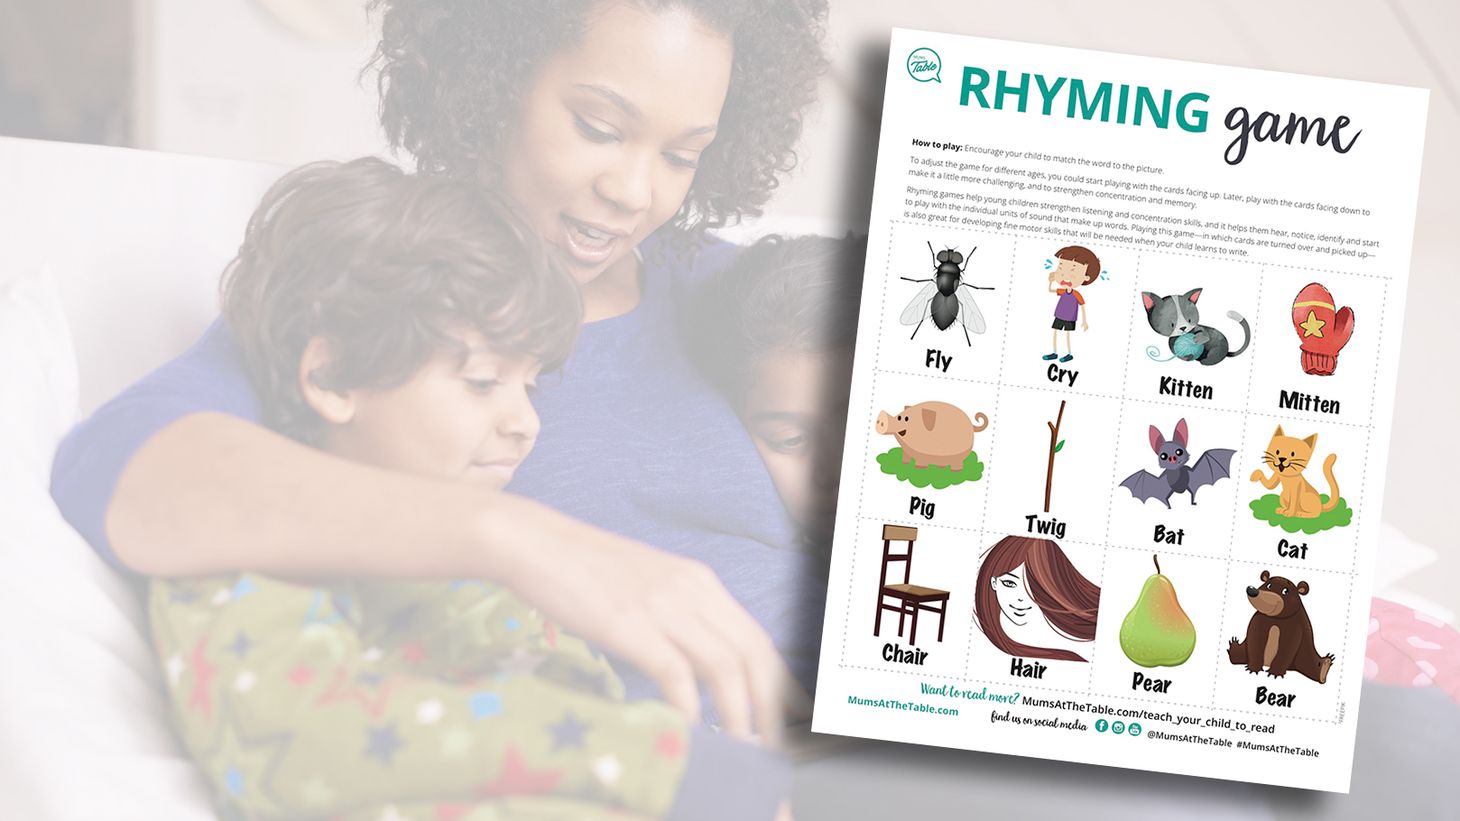 Free printable: Rhyming game to teach literacy